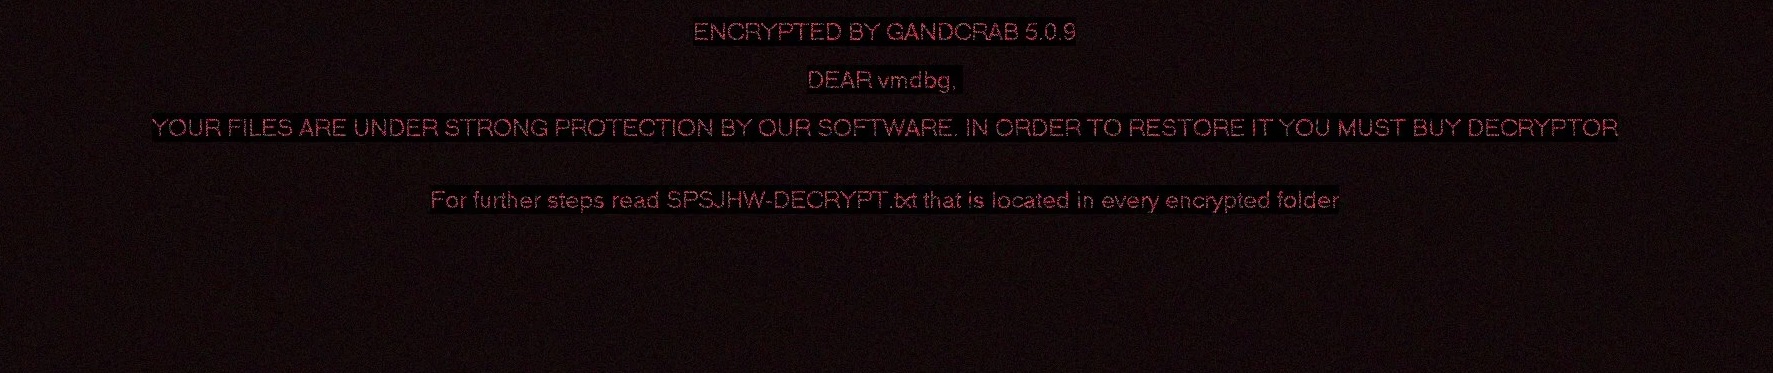 gandcrab 5.0.9 cryptovirus ransomware fond d'écran